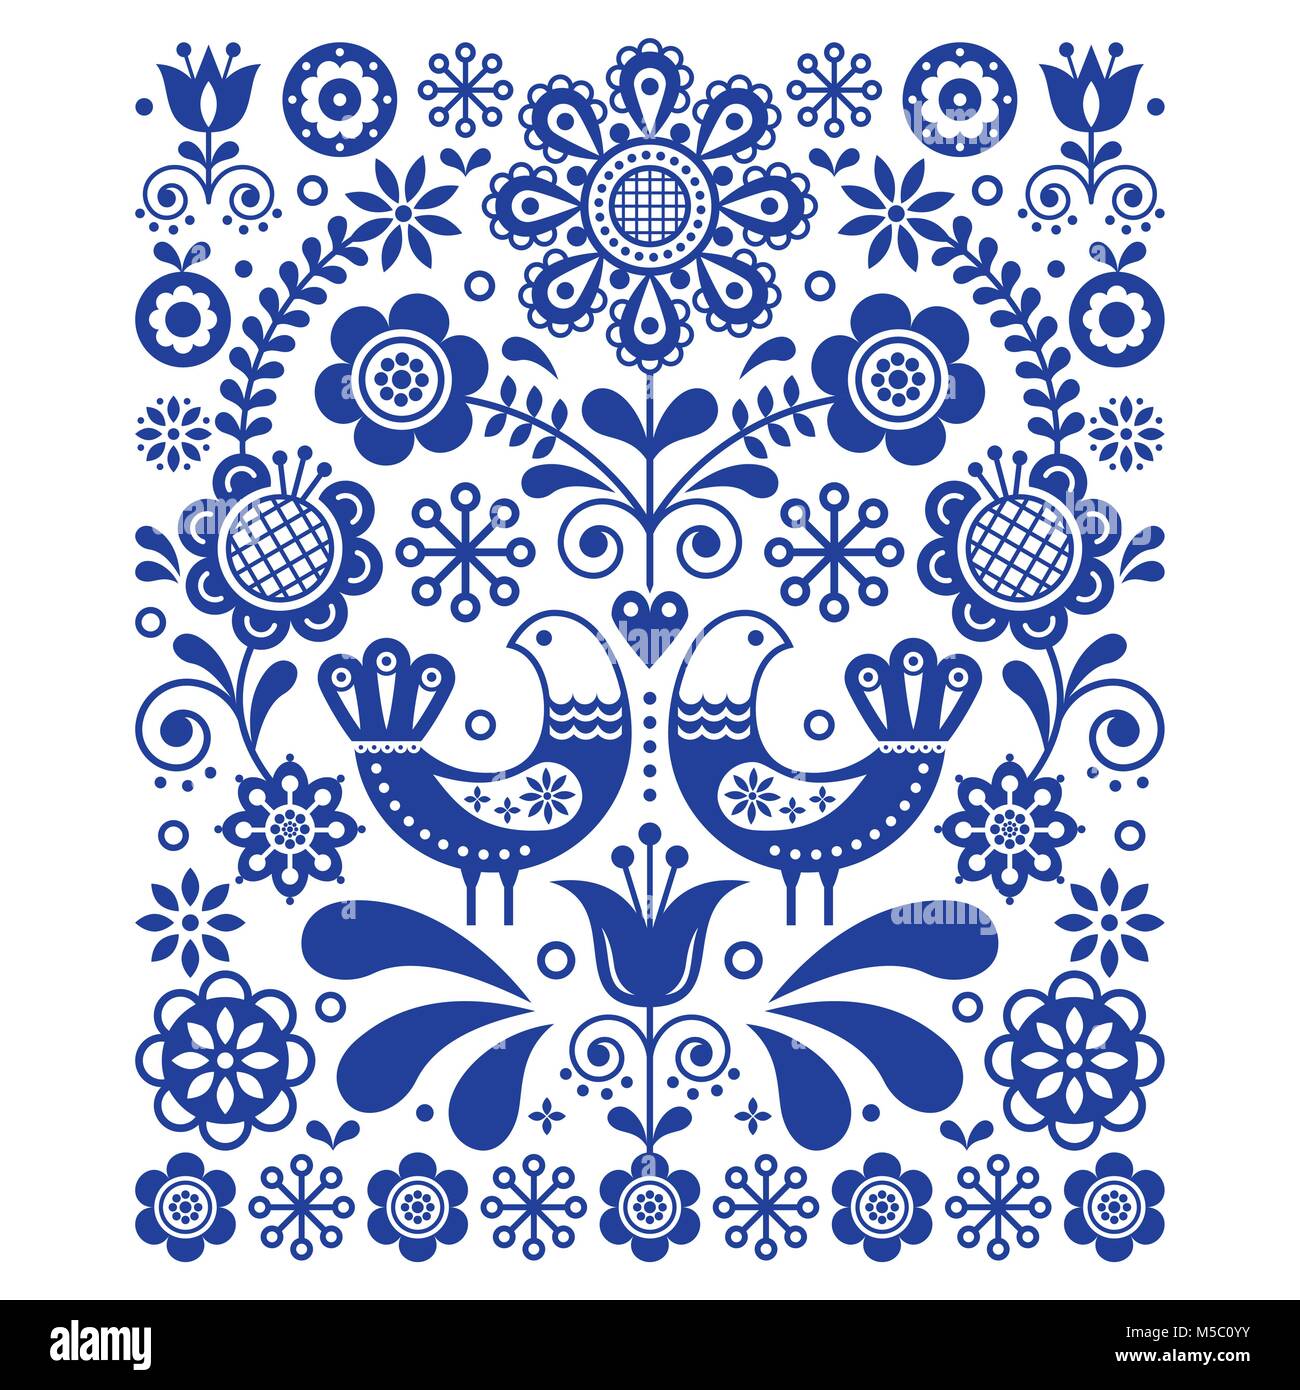 Skandinavische cute Volkskunst vektor Dekoration mit Vögel und Blumen, Skandinavischen marine blau Blumen muster Stock Vektor